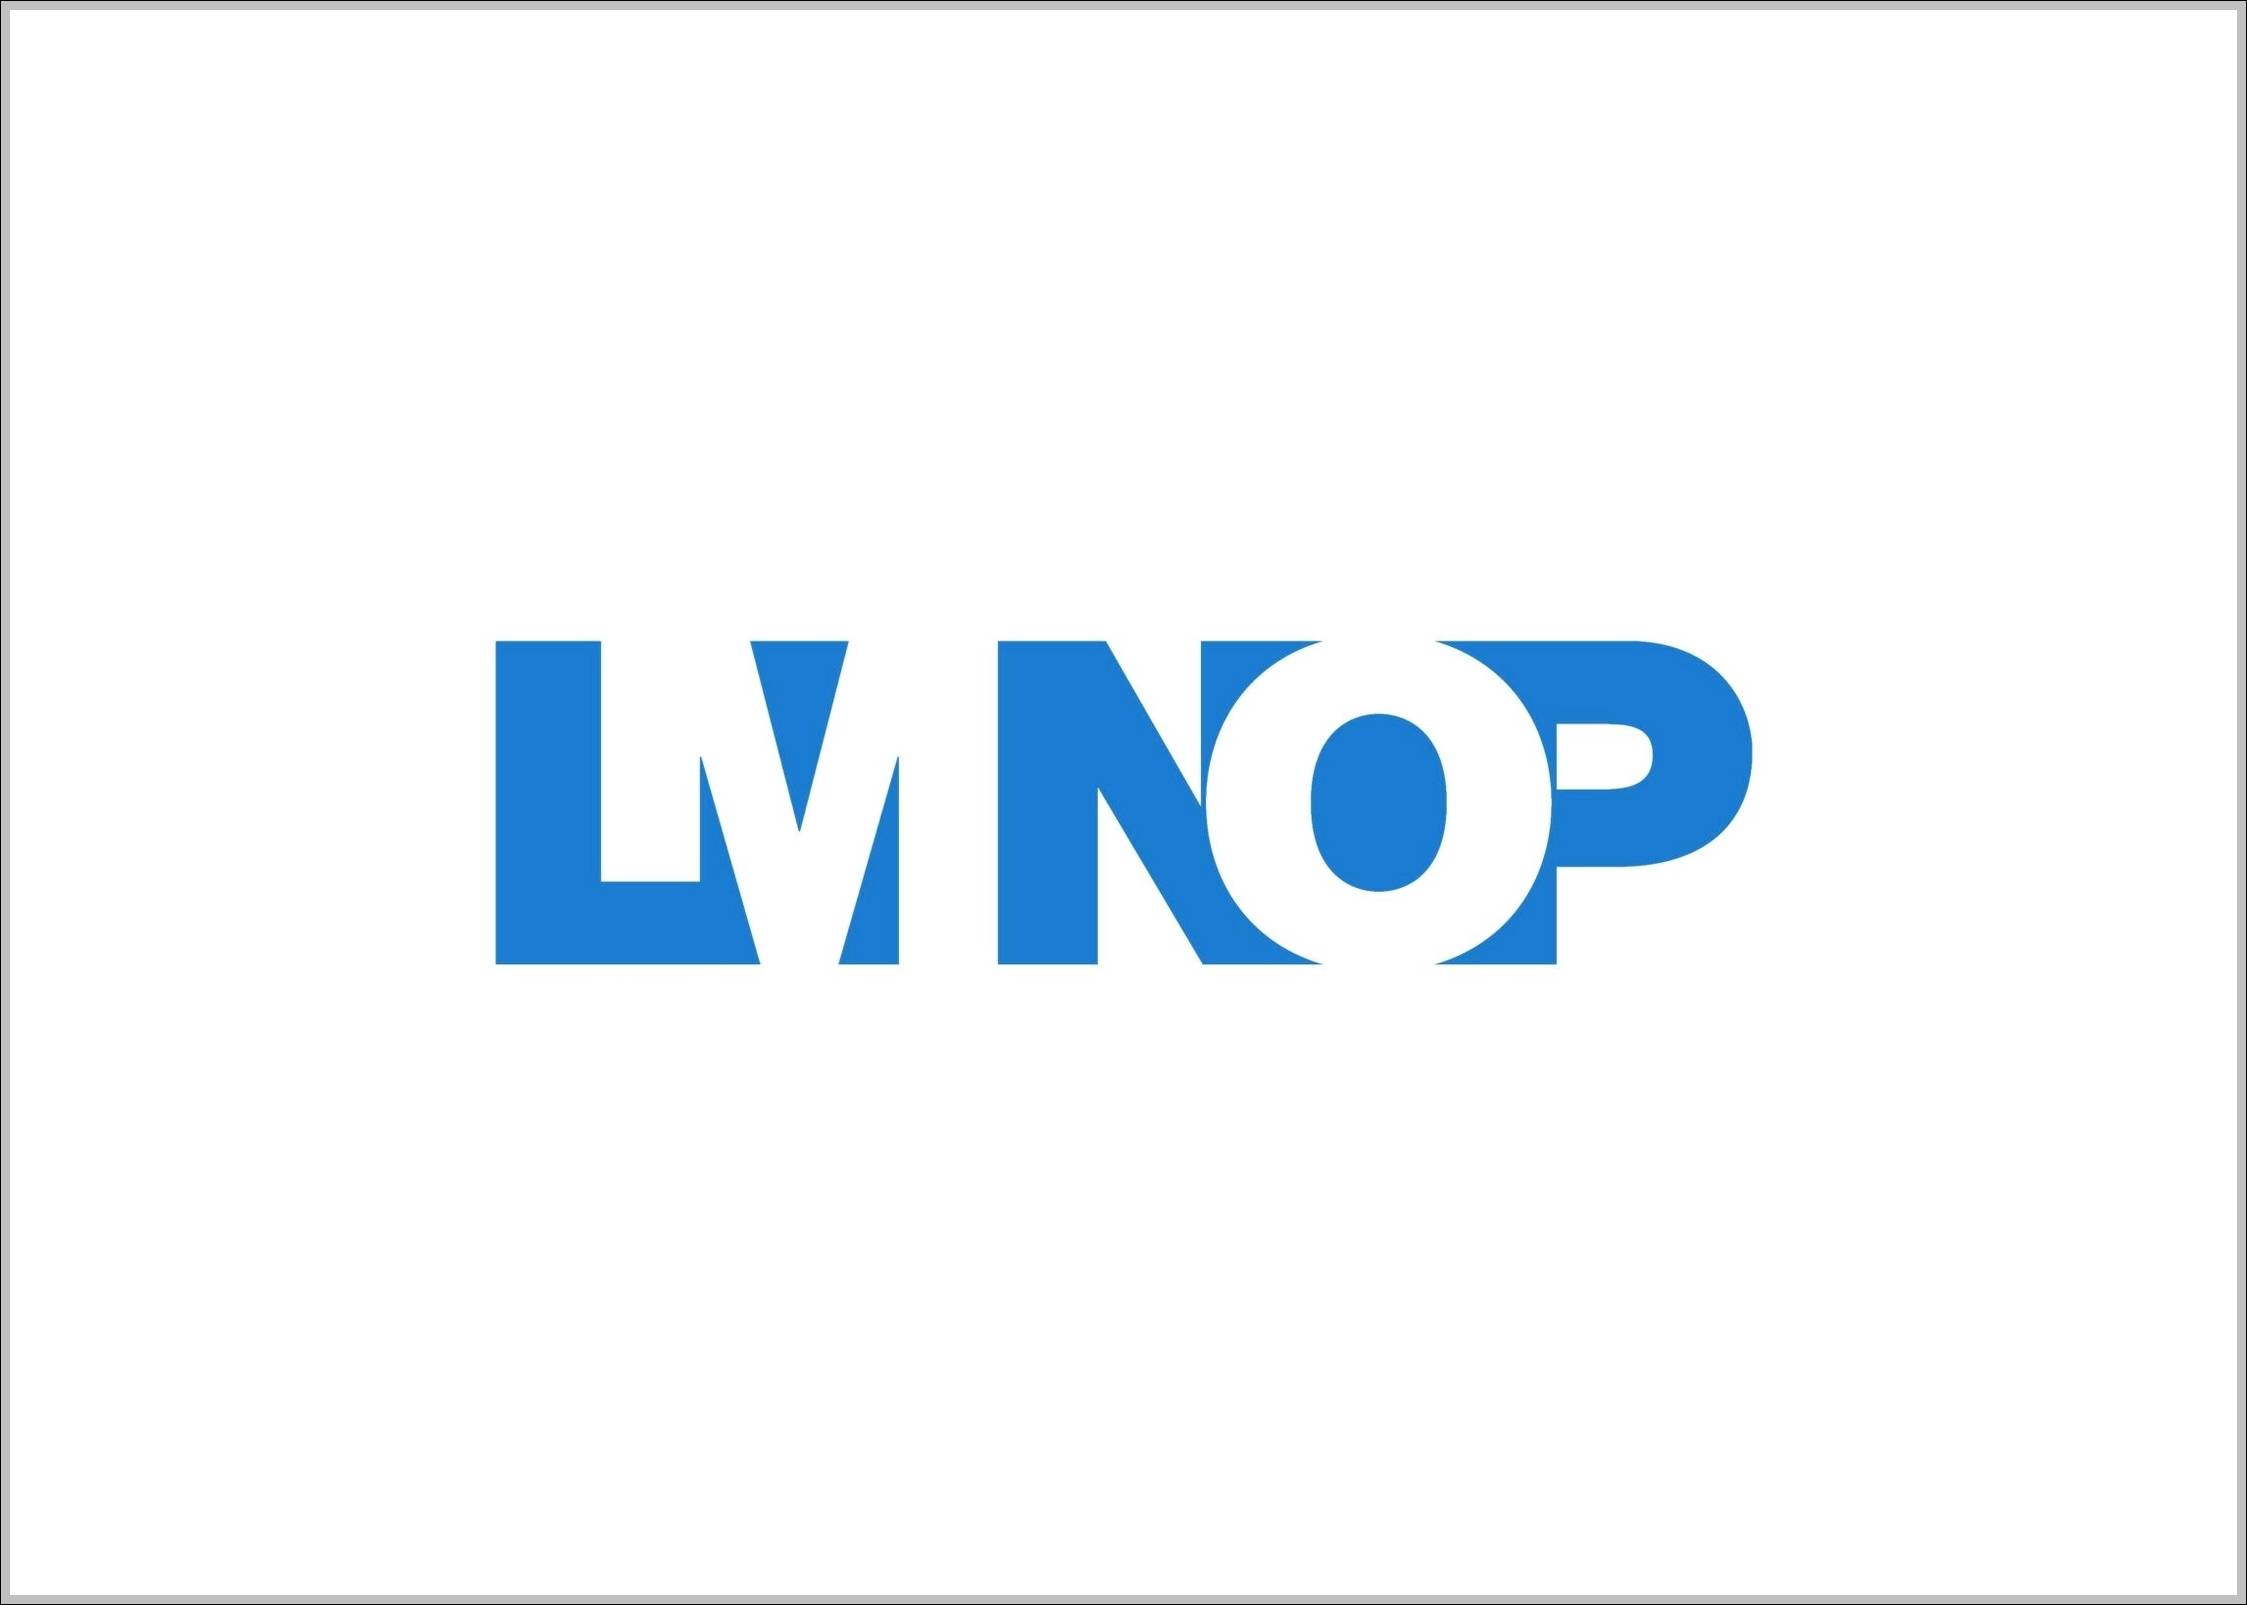 LMNOP logo